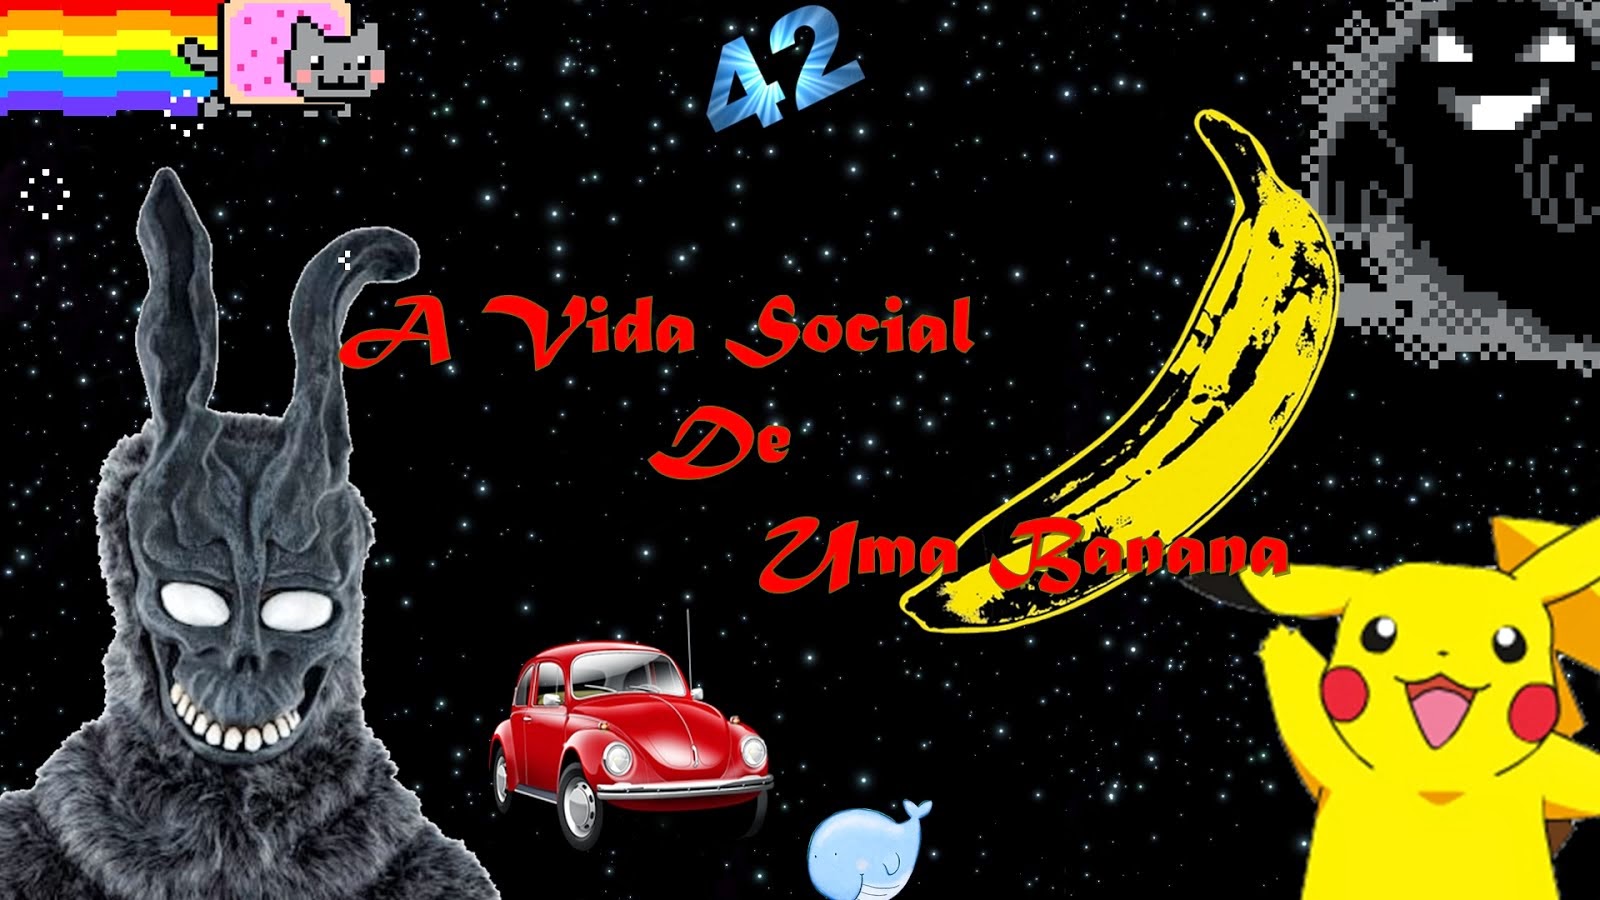 A Vida Social de Uma Banana